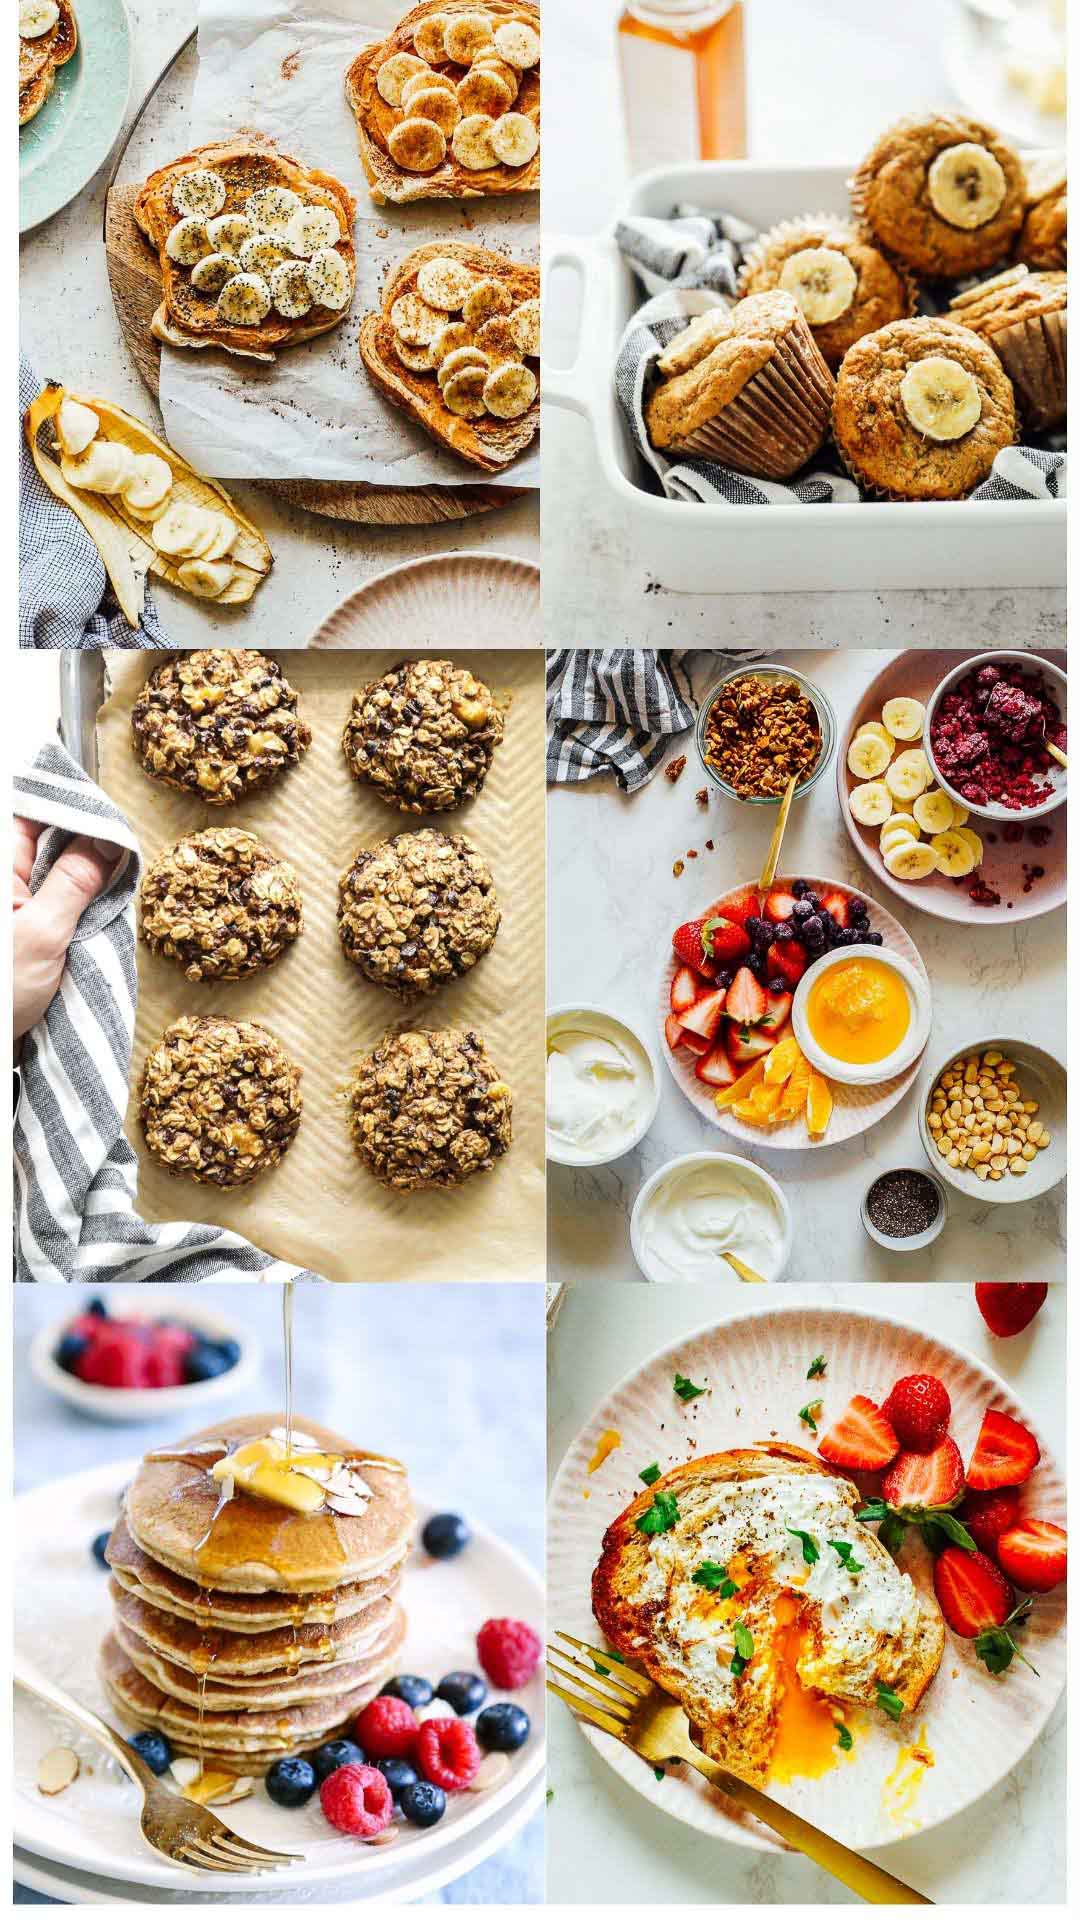 Breakfast options: banana peanut butter toast, muffins, breakfast cookies, yogurt bowls, pancakes, and eggs in a basket.